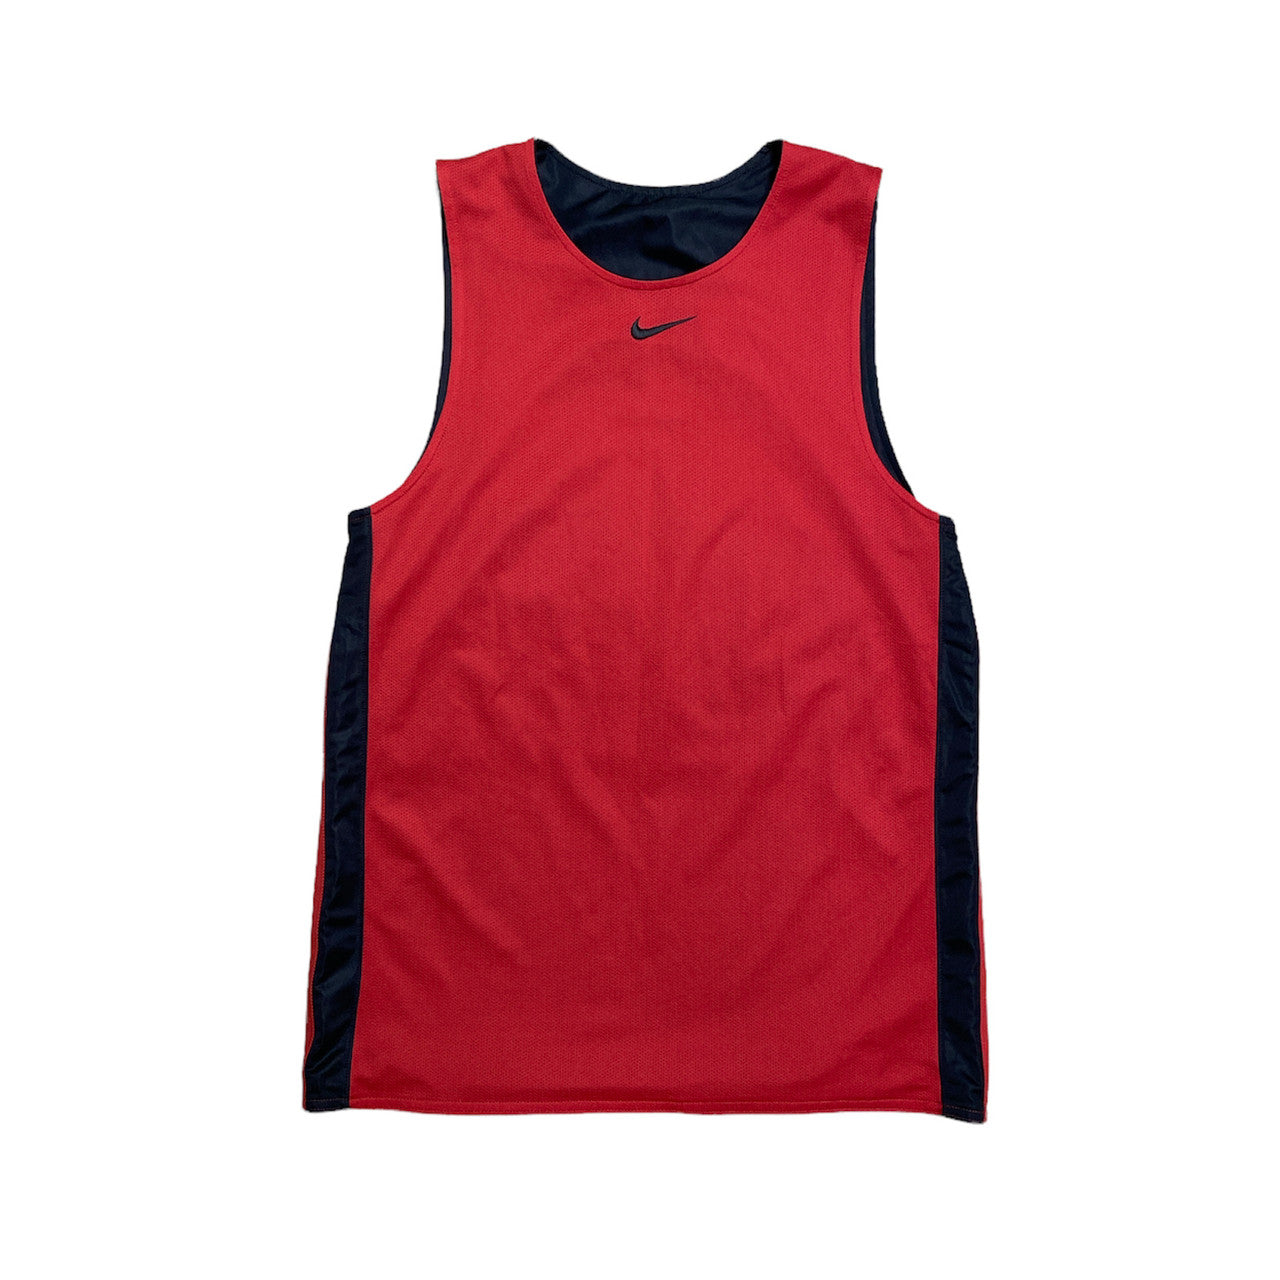 Nike Red Reversible Basketball Jersey